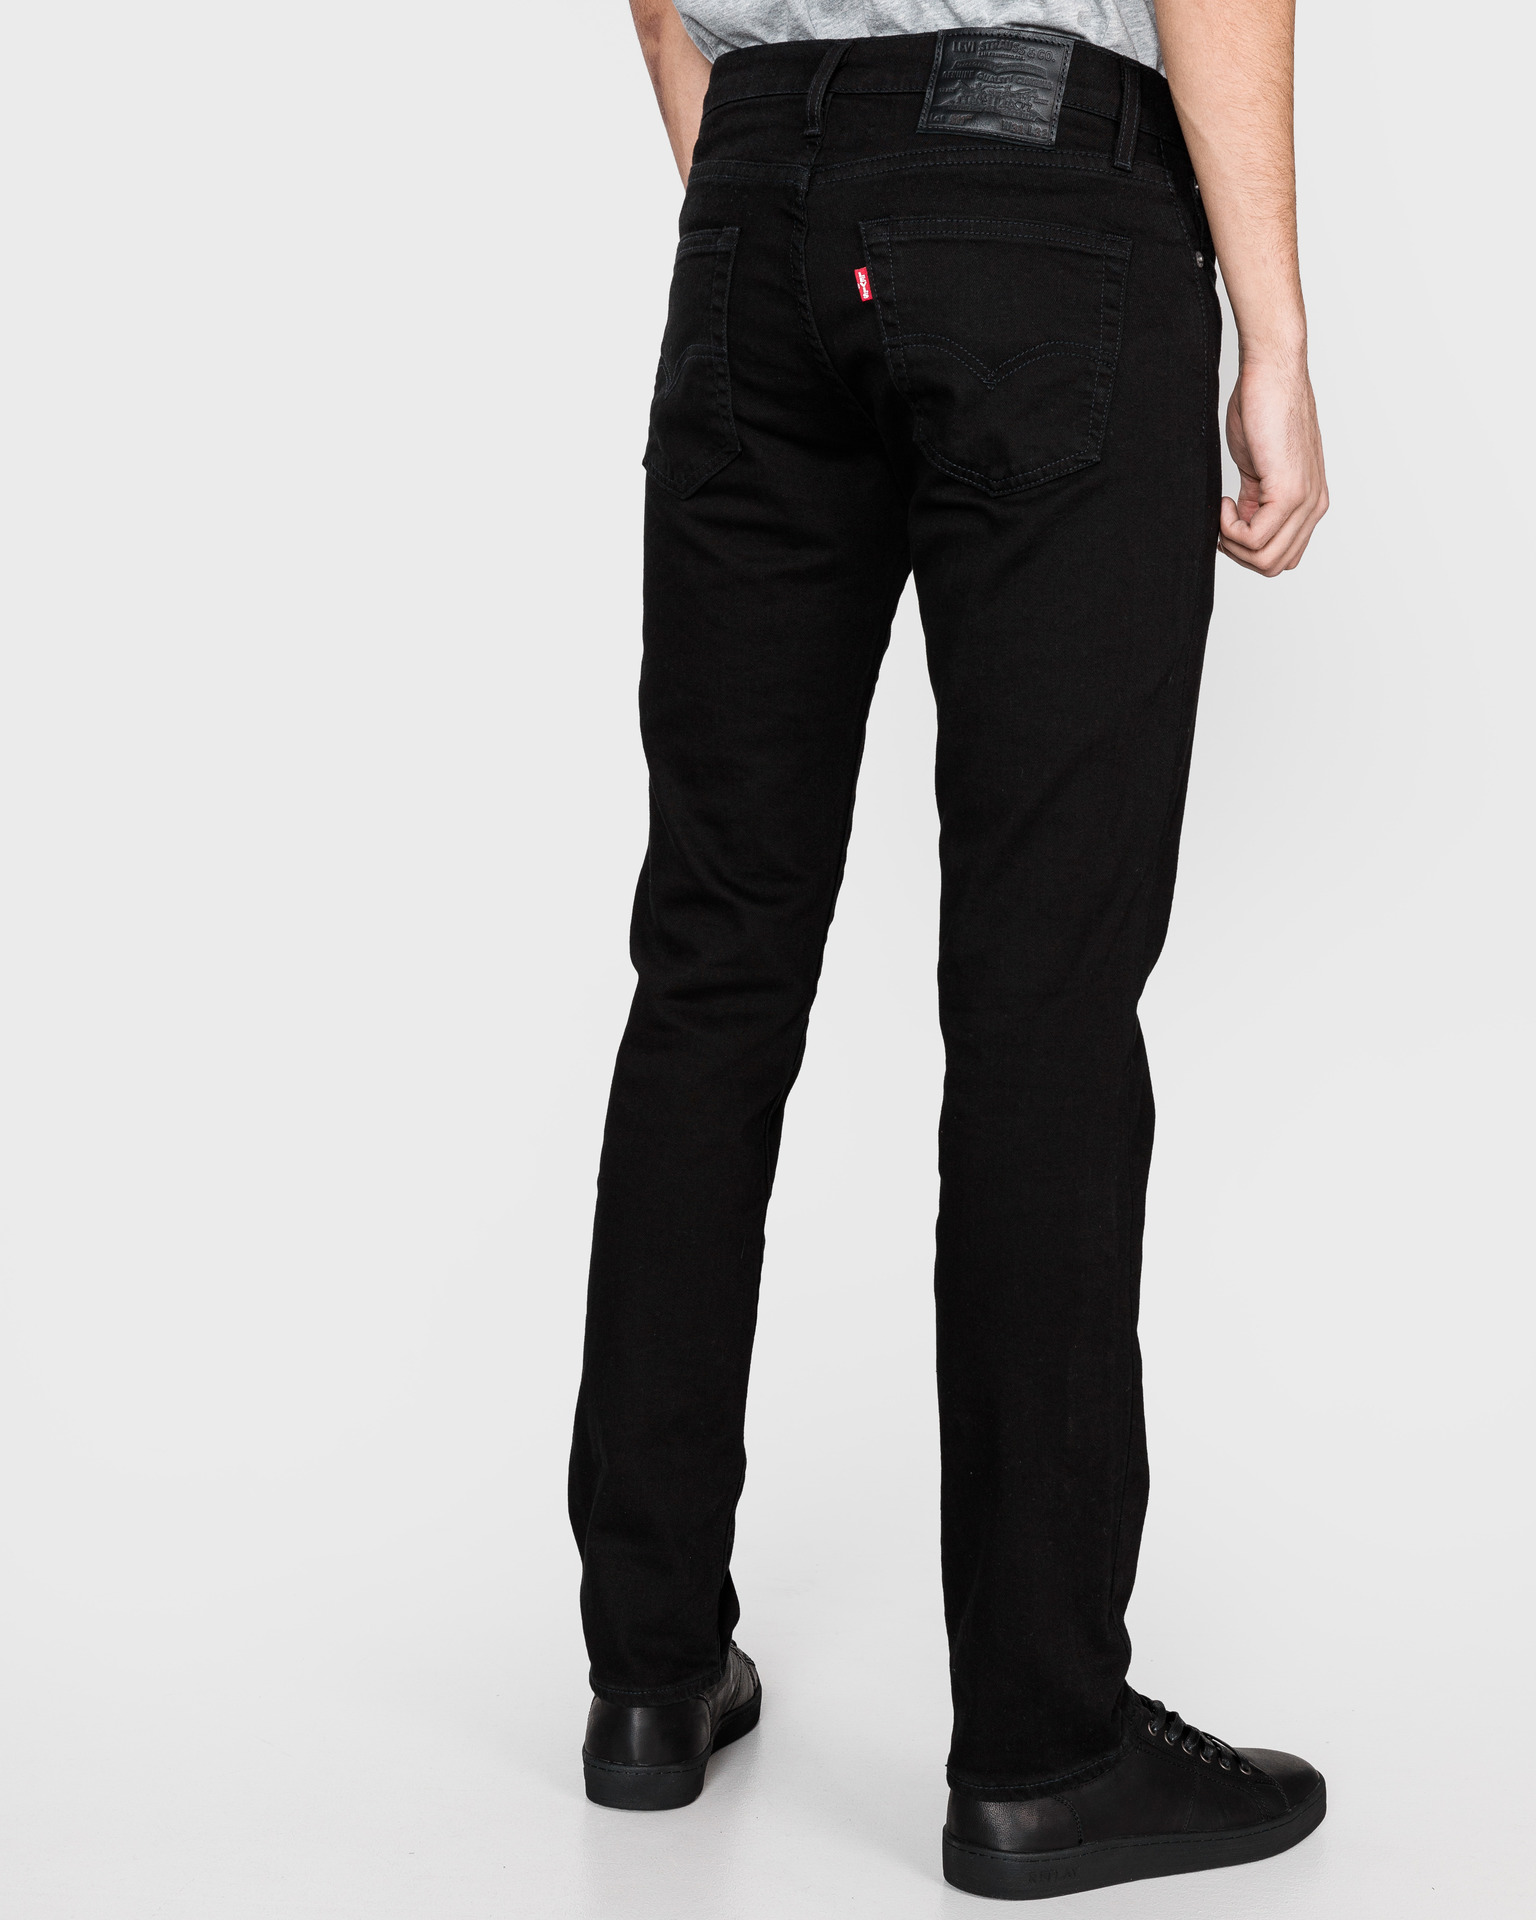 Levi's® 511 Slim Fit Jeans Hose Black Faded Denim ! W 31 /L 34 schwarz NEU 